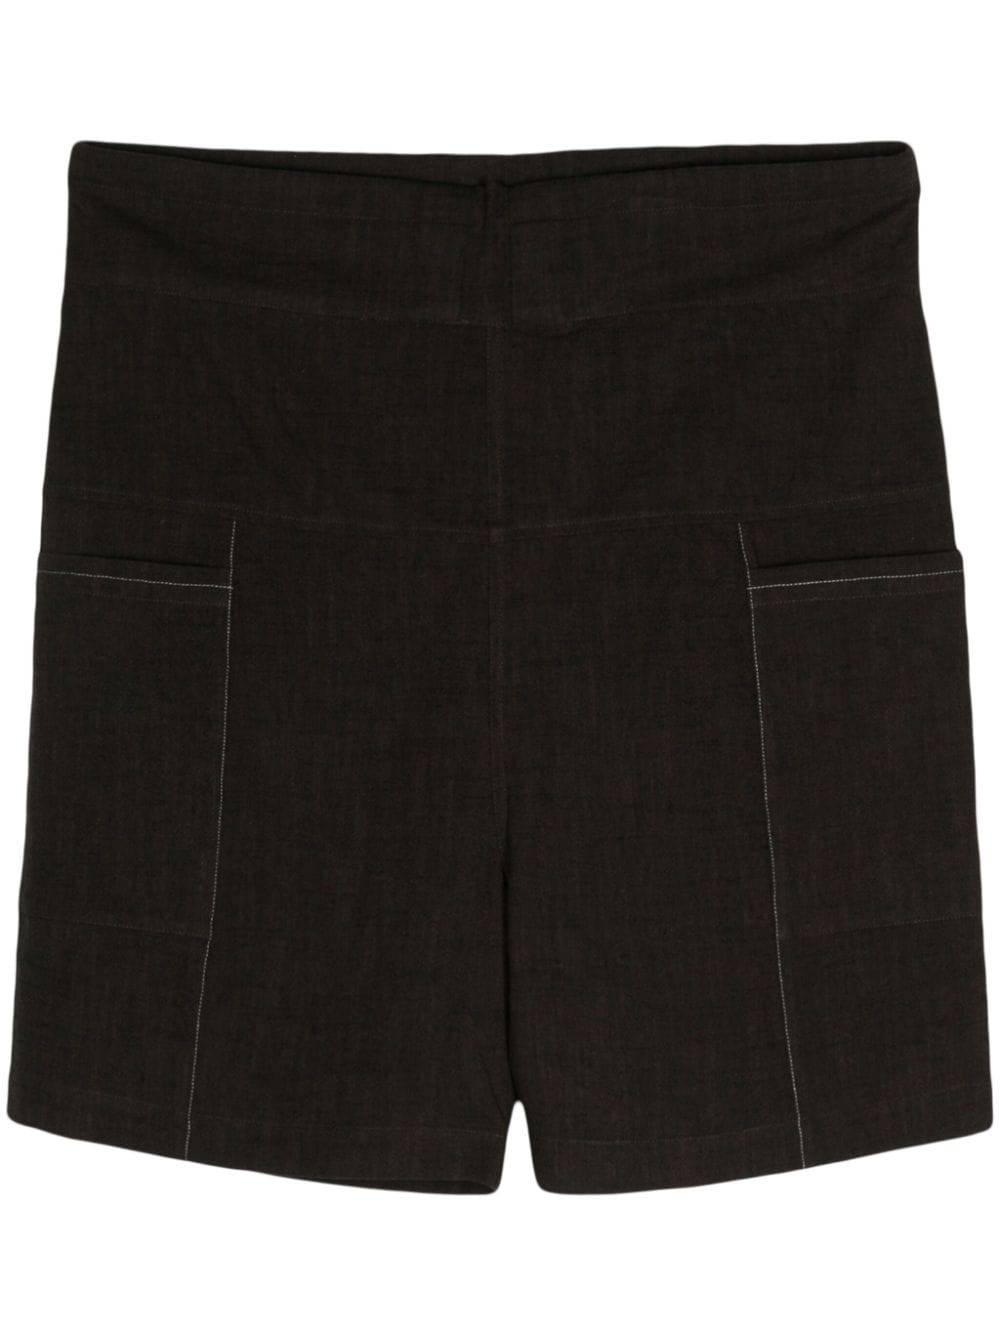 Jii cotton shorts